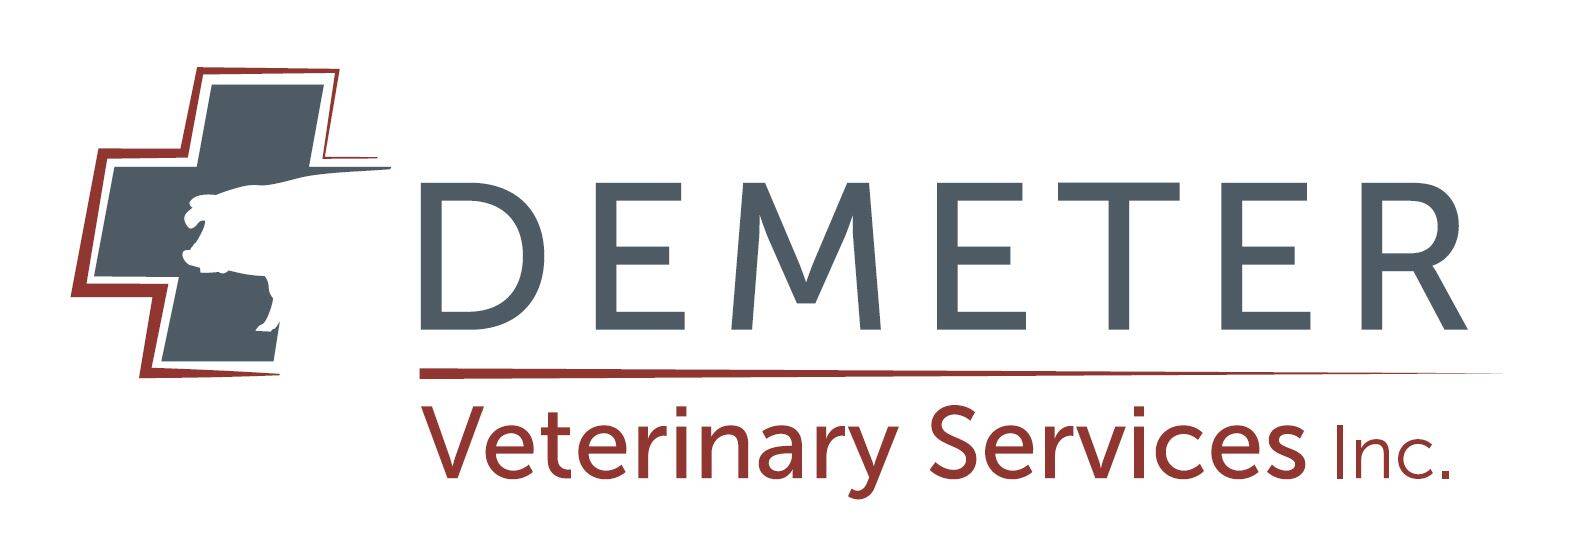 Demeter Veterinary Services Inc.